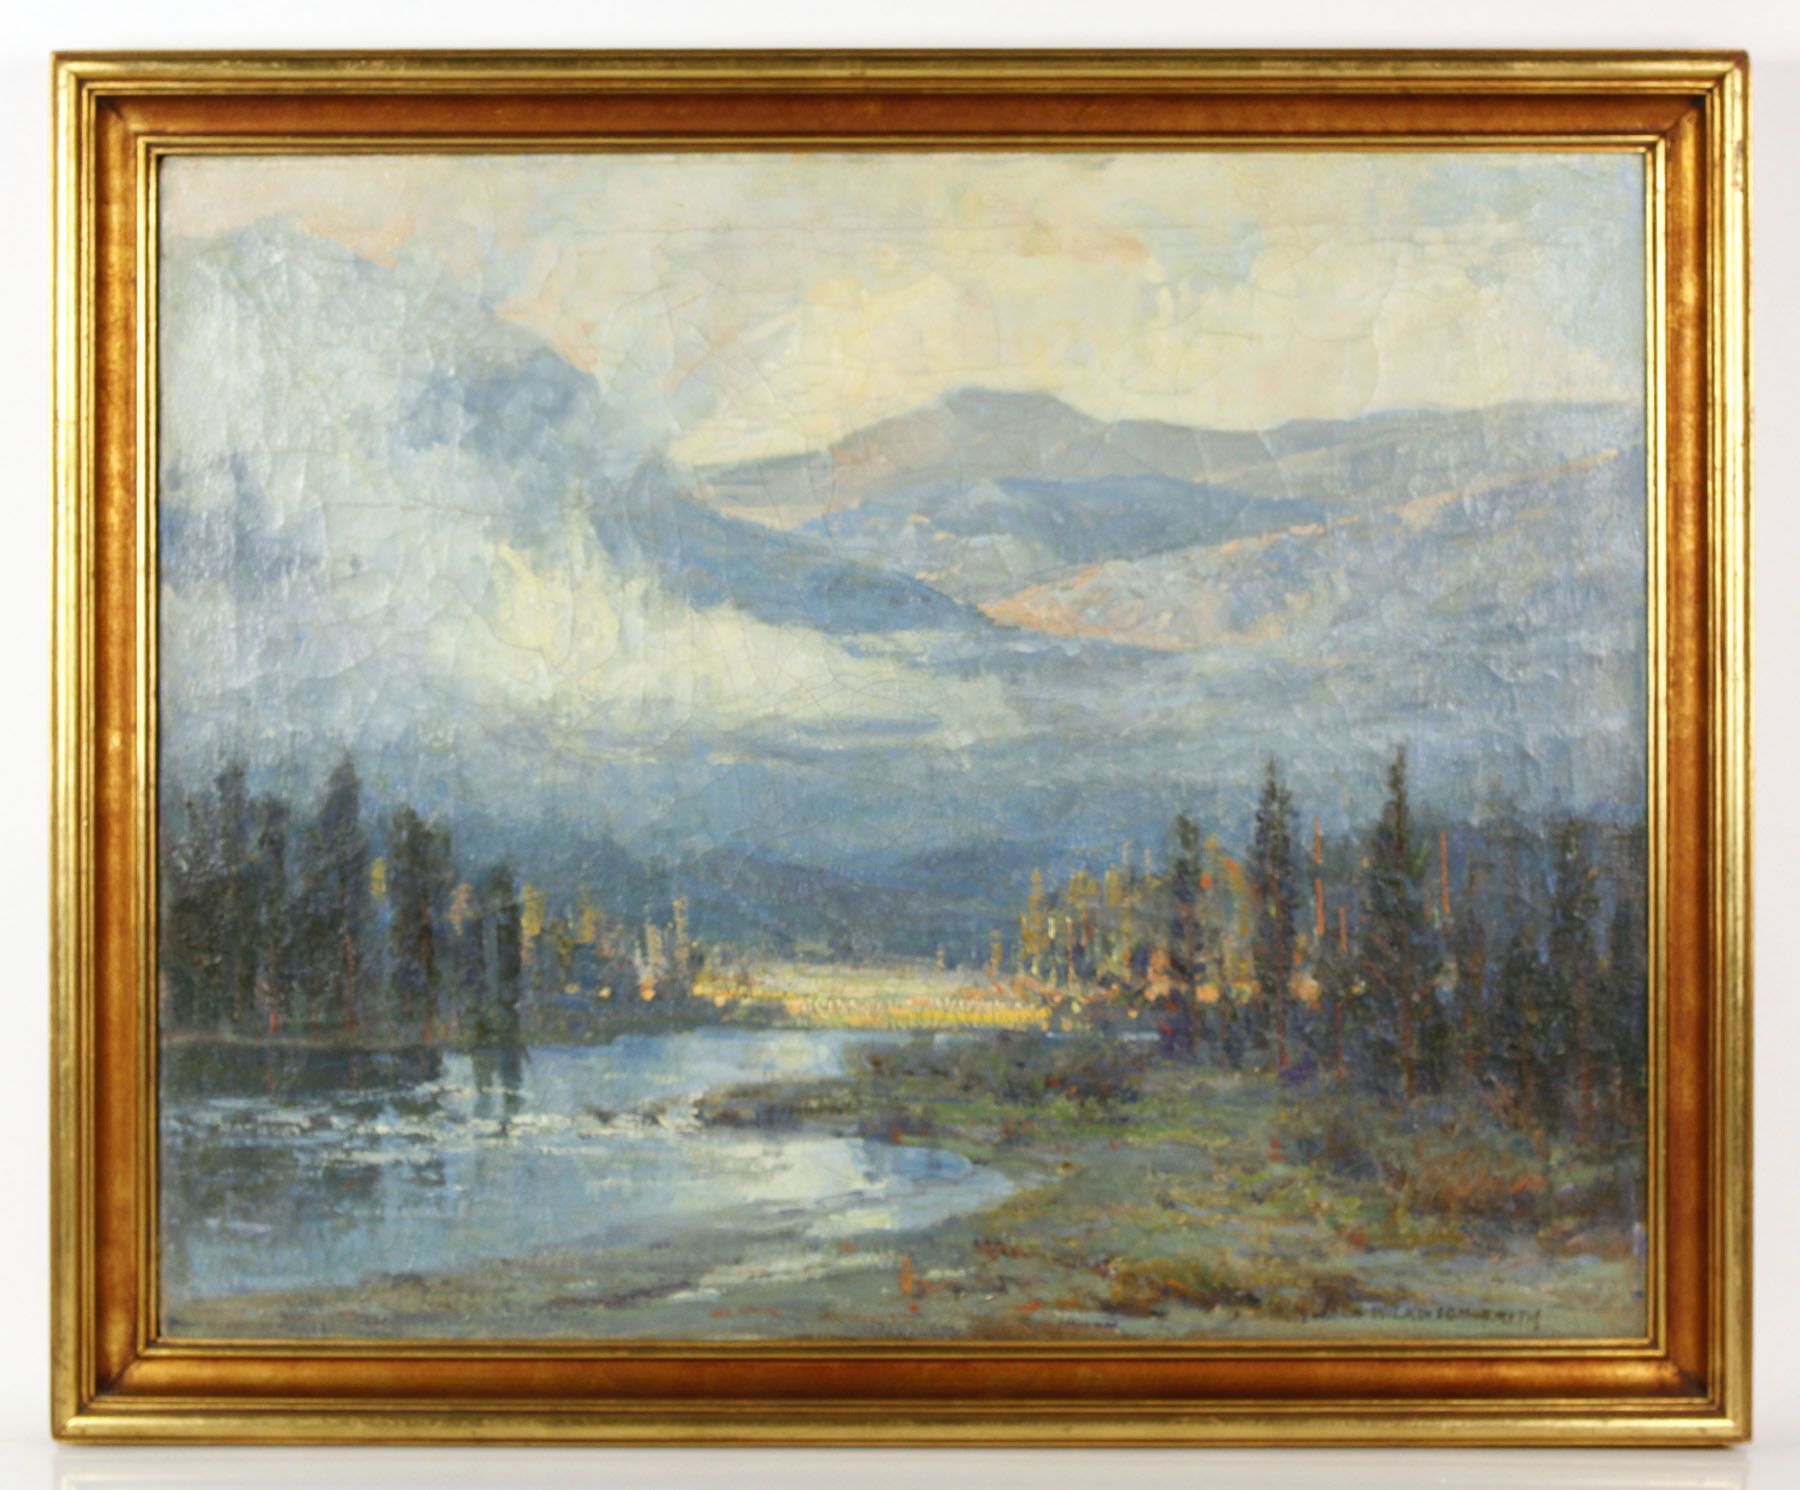 Jack Wilkinson Smith (American, 1873-1949), California landscape